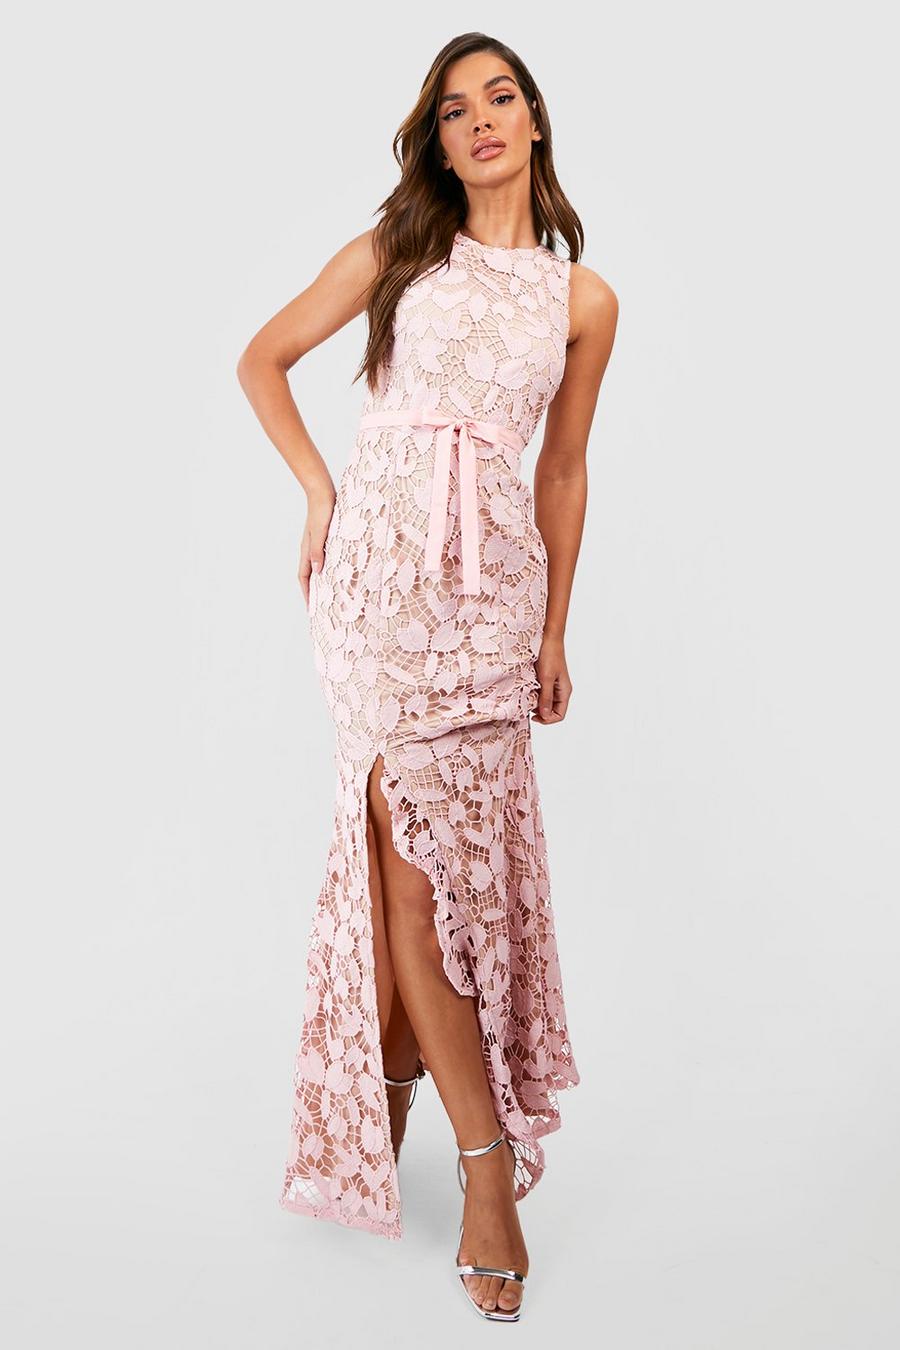 Blush rose Lace Ruffle Split Maxi Dress